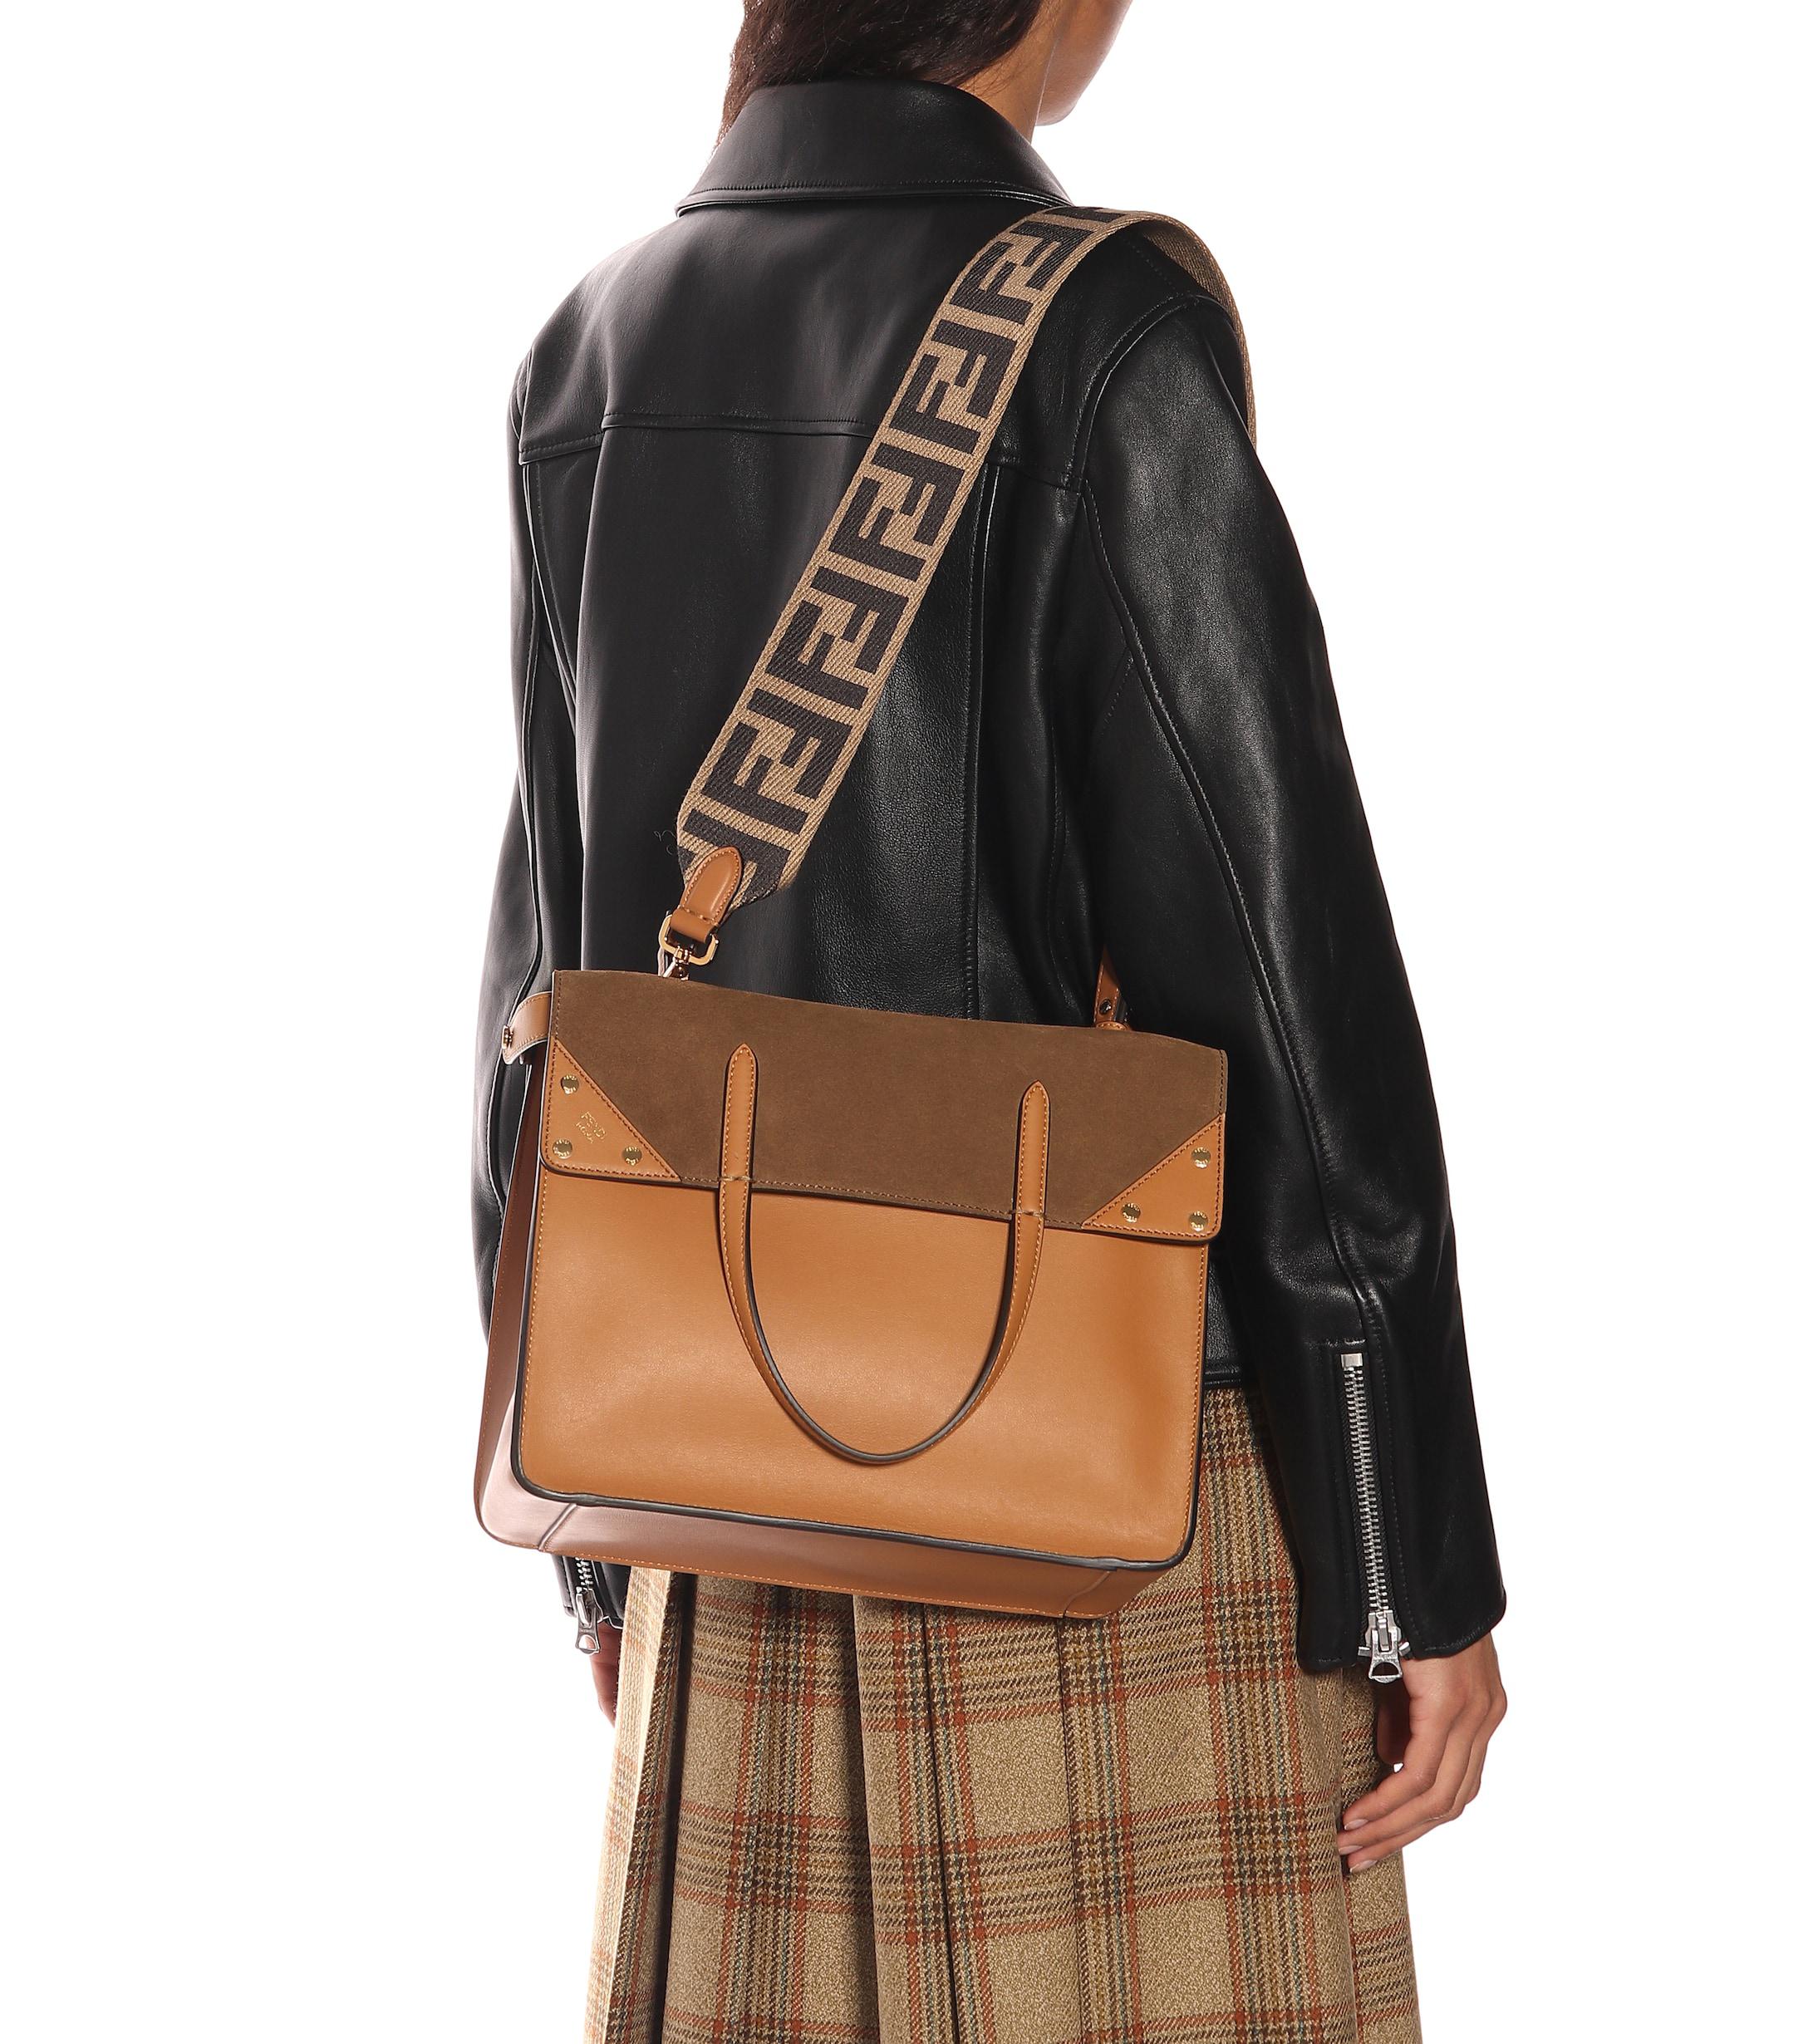 Fendi Flip Leather And Suede Shoulder Bag in Brown - Lyst